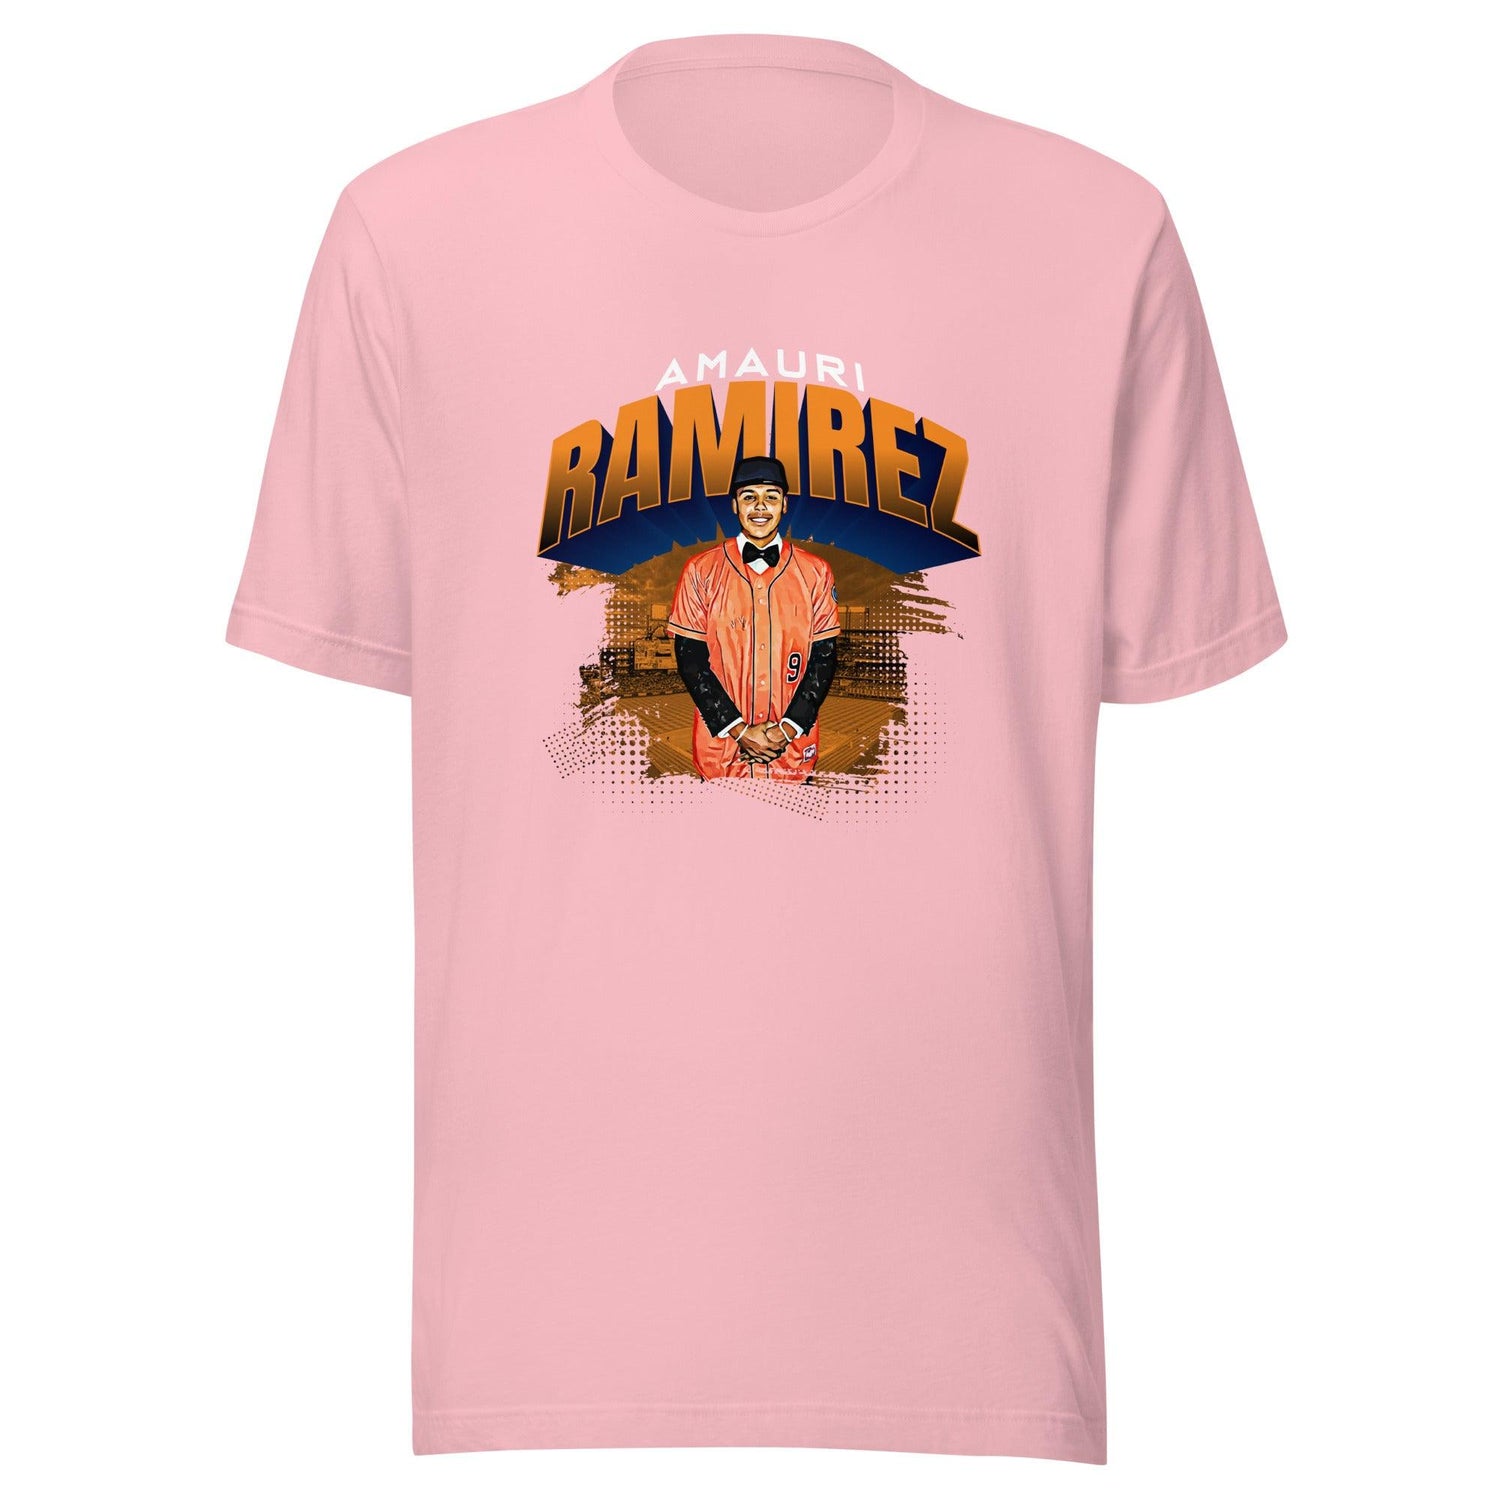 Amauri Ramirez "Gameday" t-shirt - Fan Arch